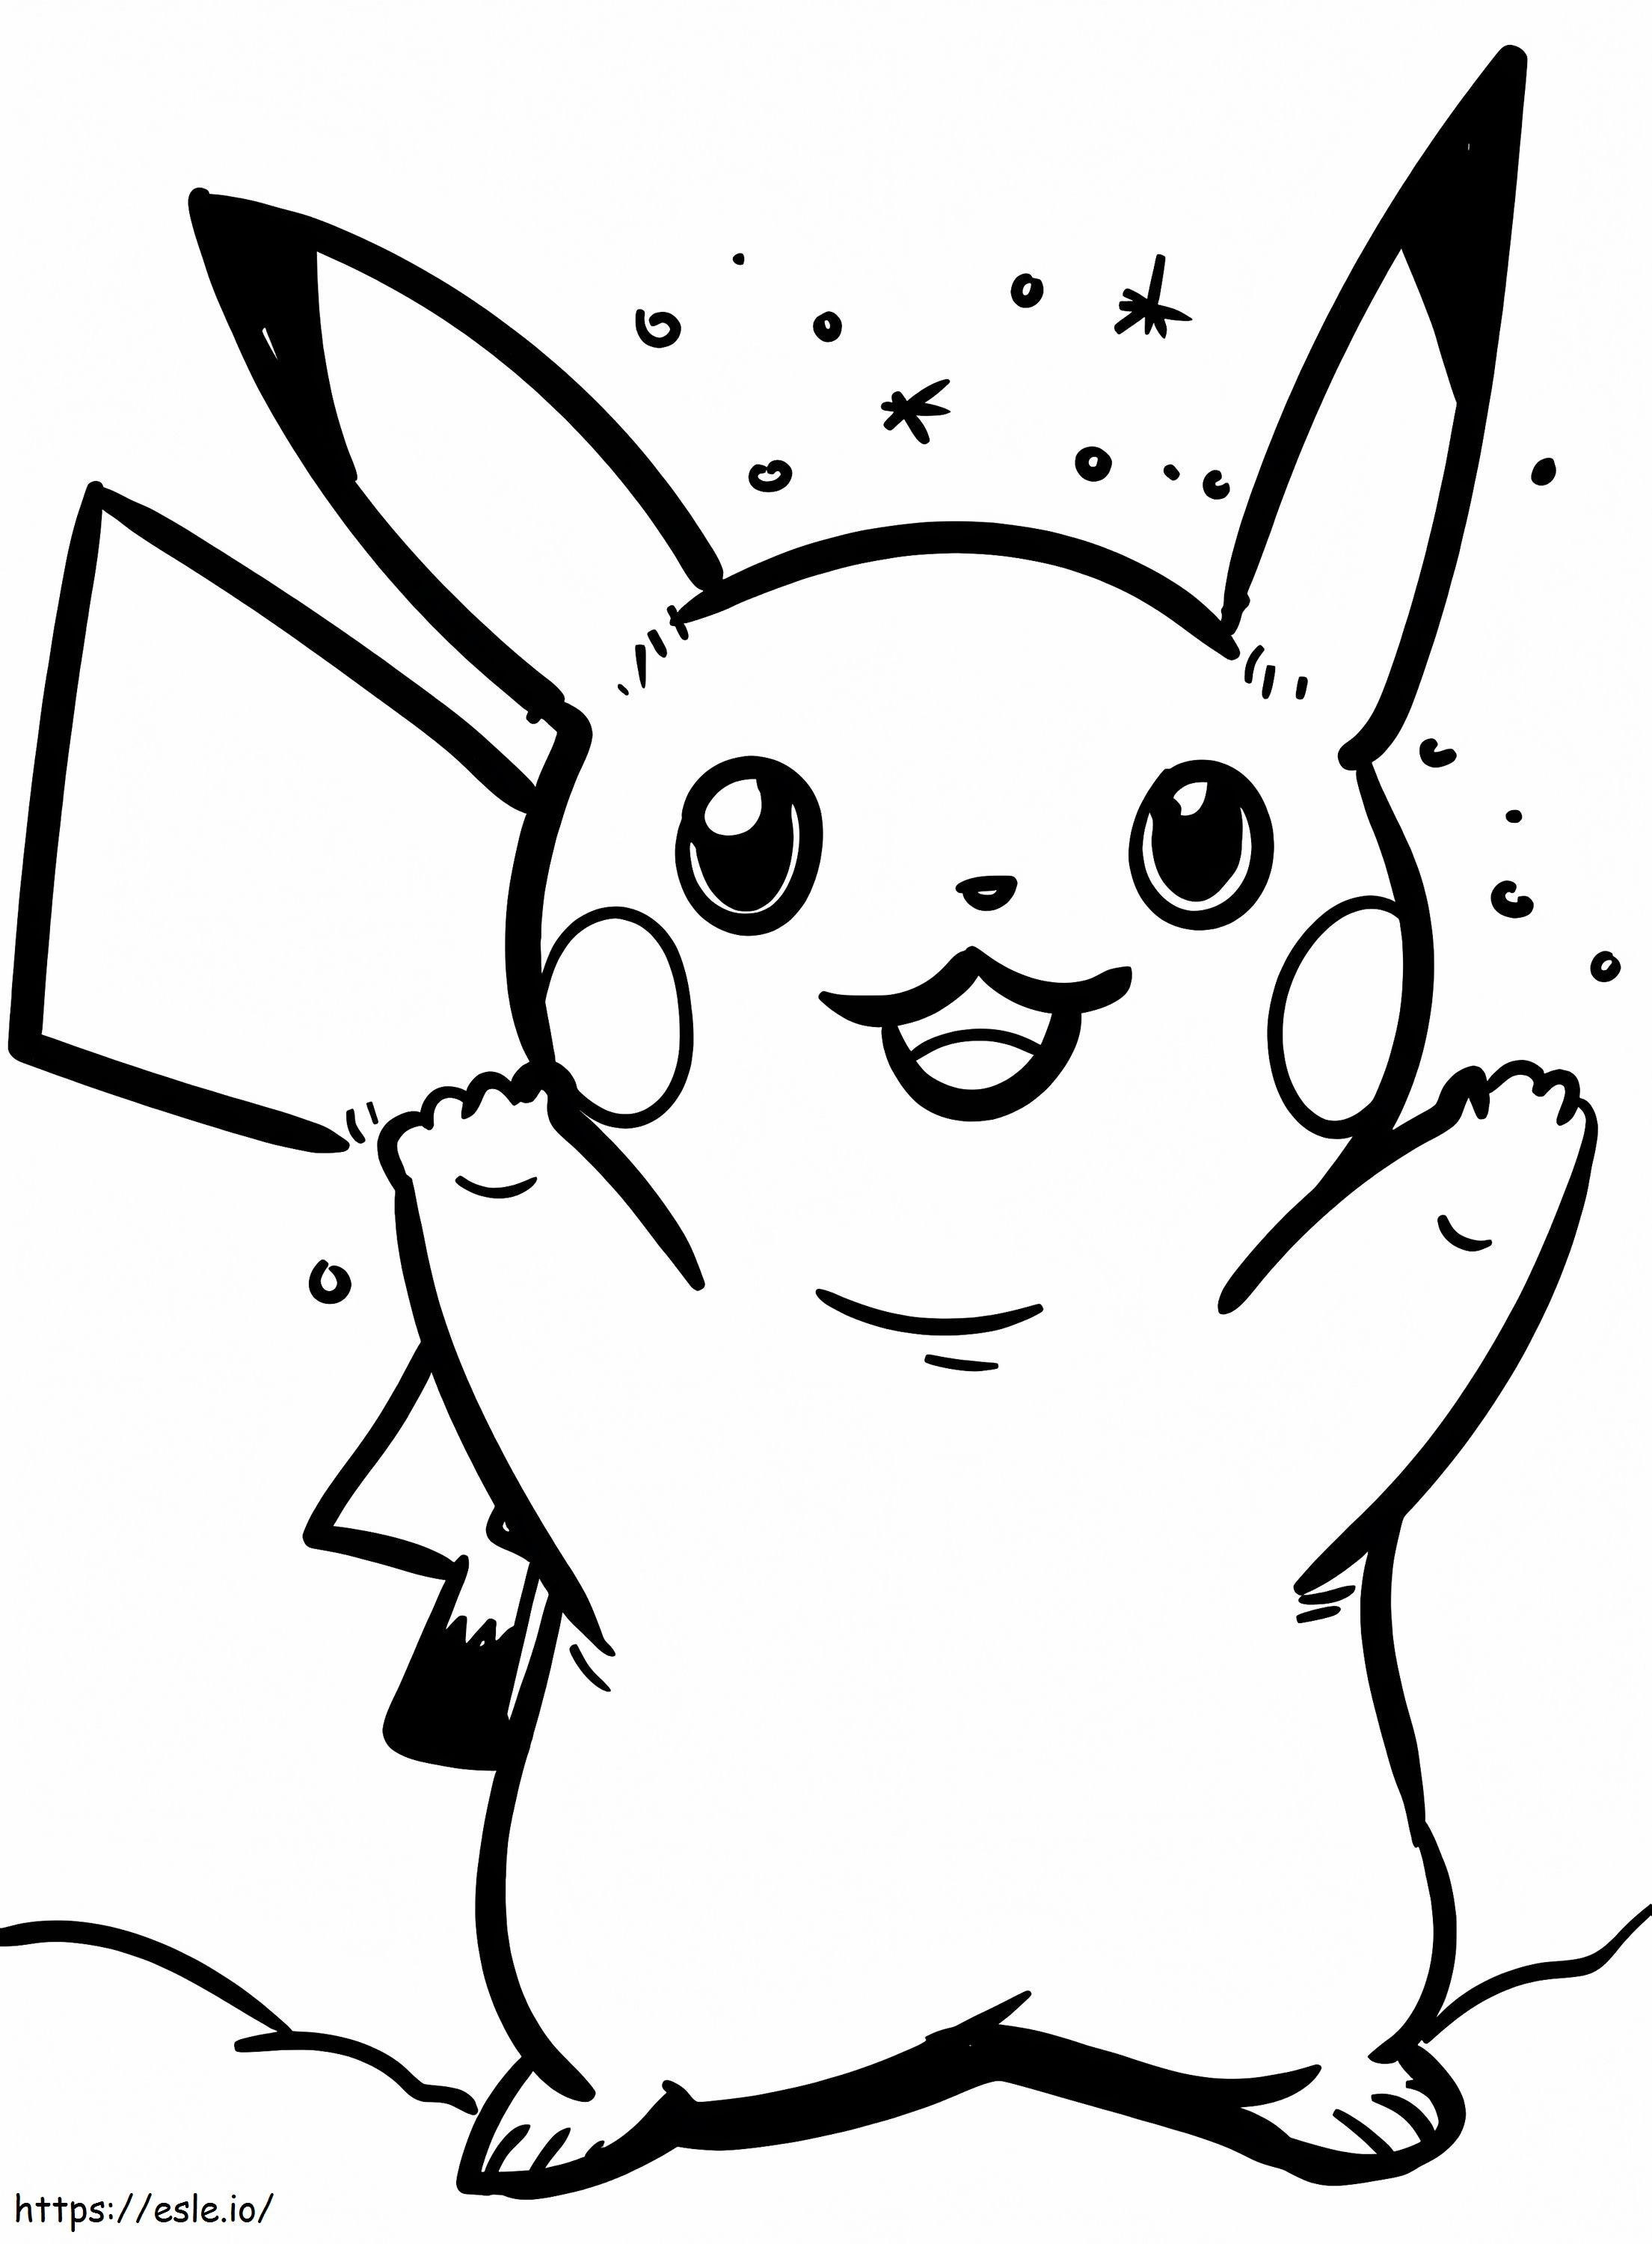 Pikachu Printable coloring page